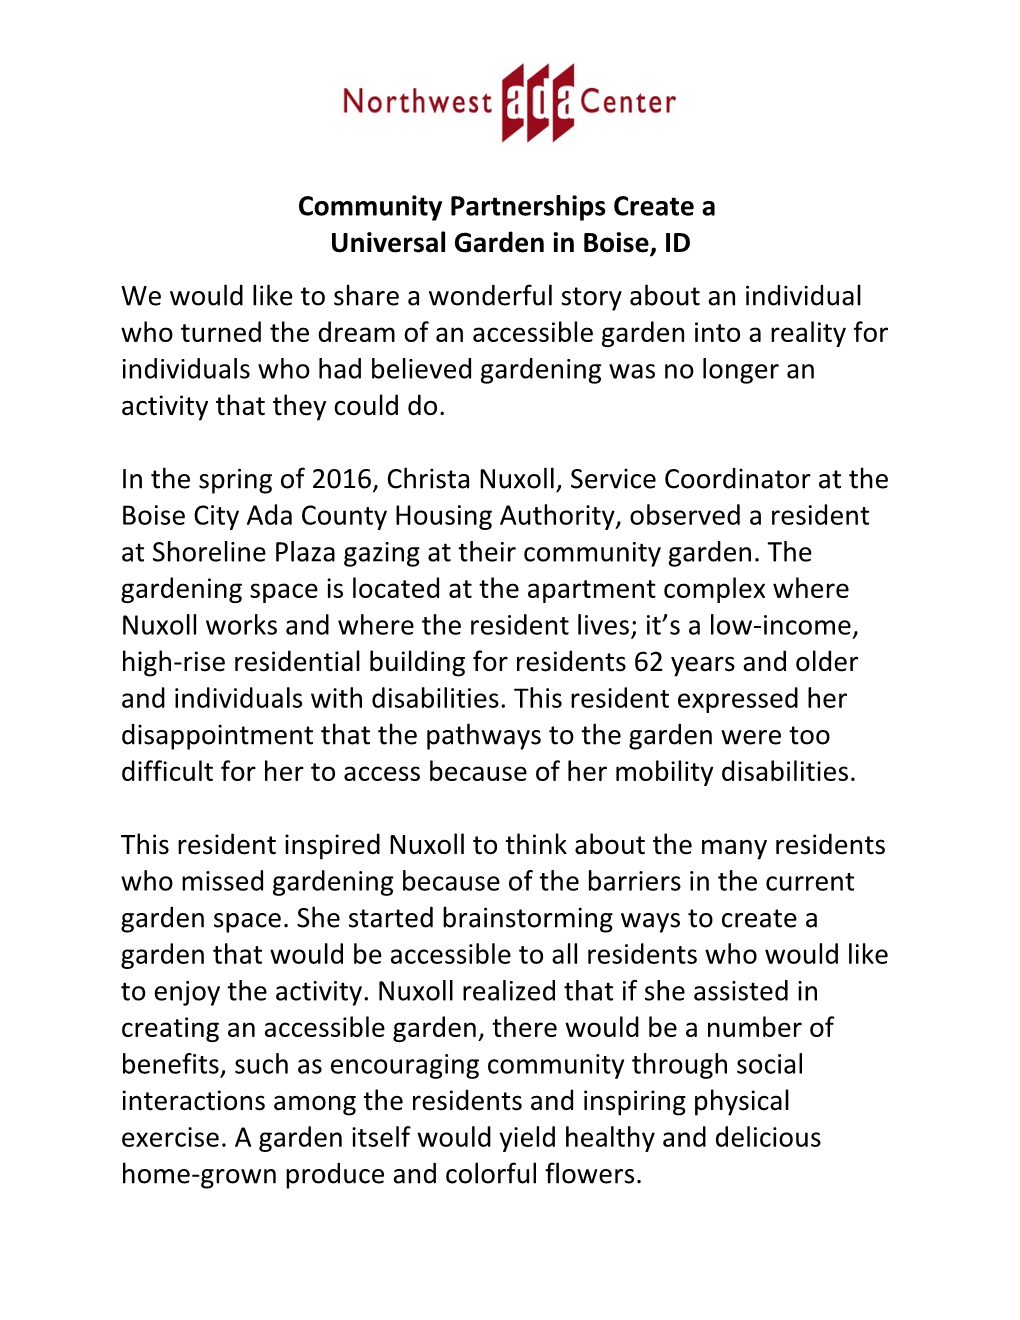 Community Partnerships Create a Universal Garden in Boise, ID